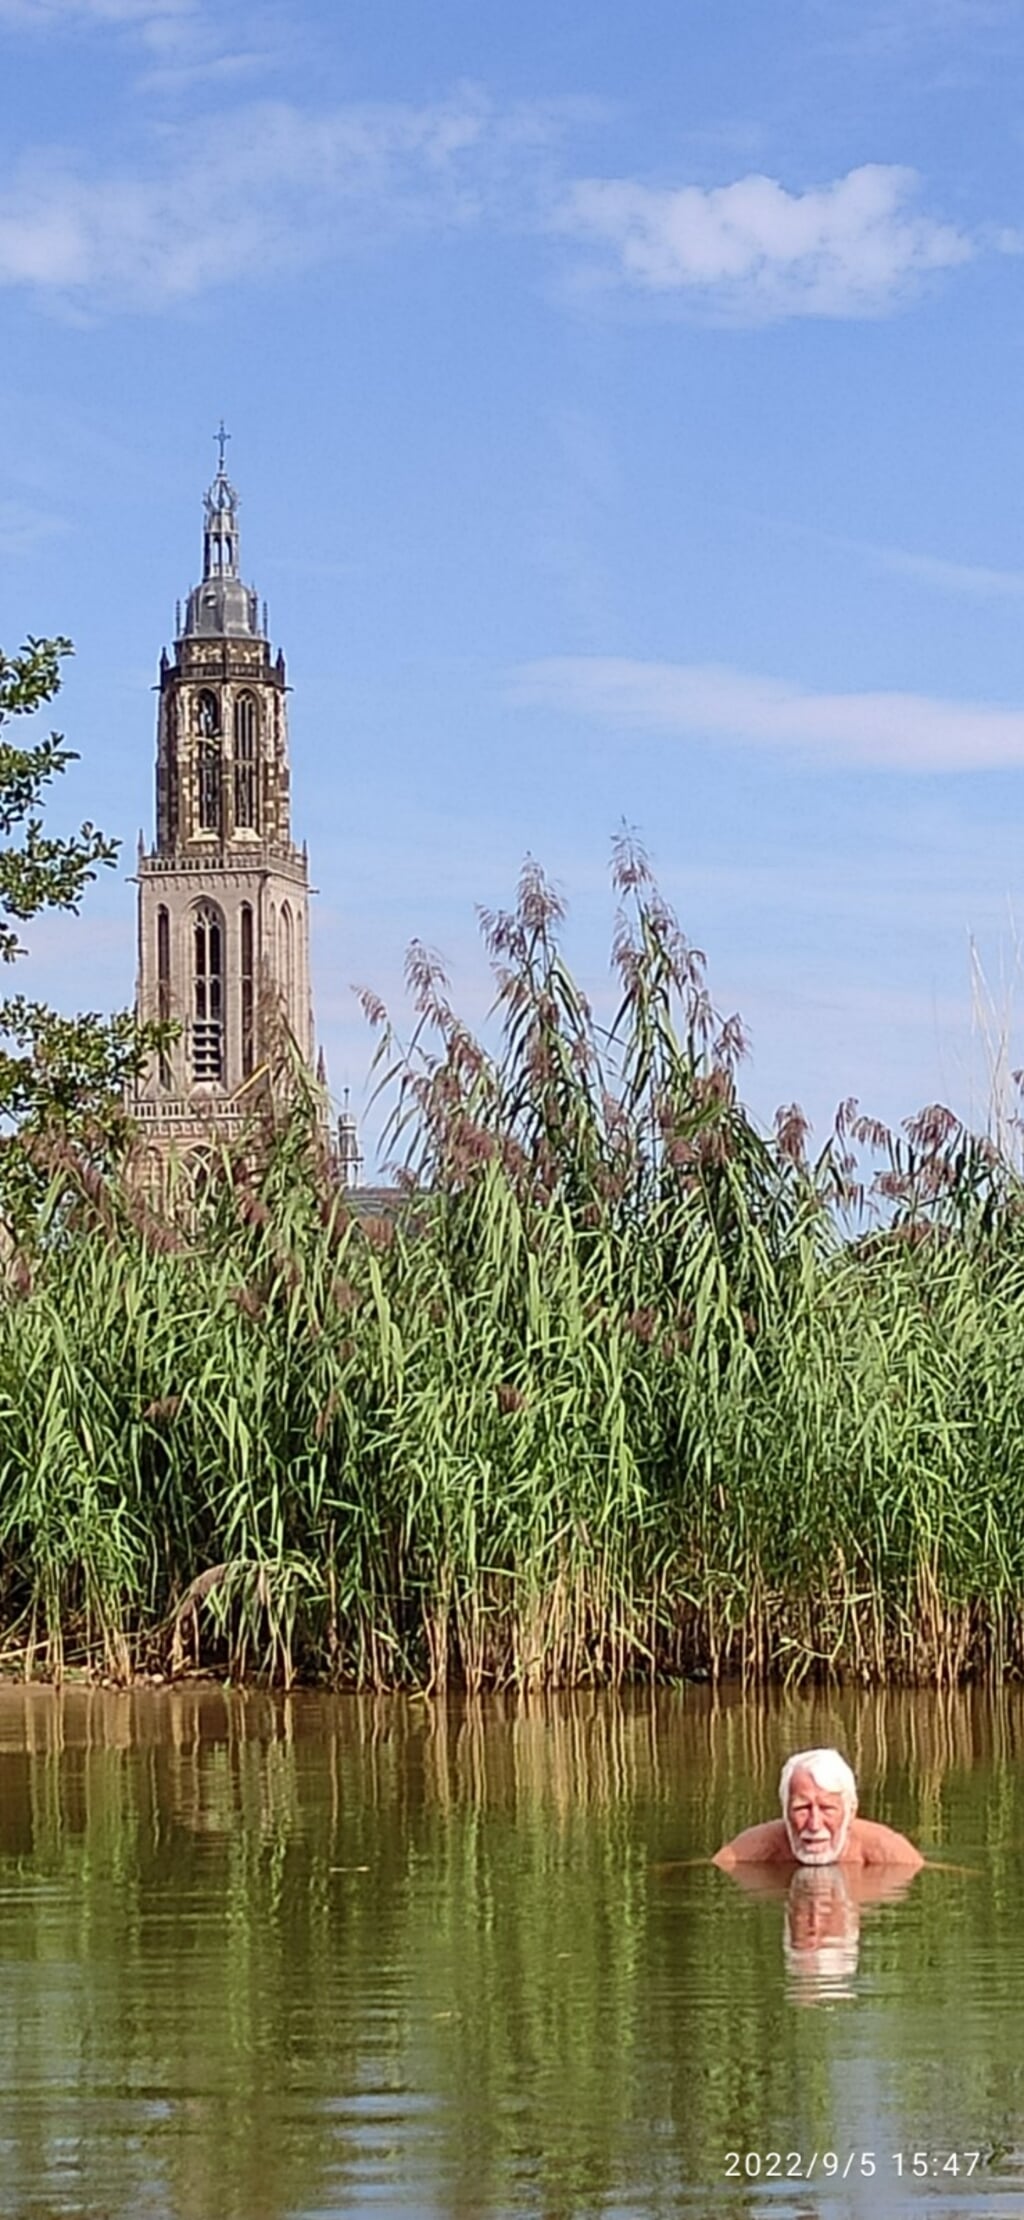 Cunera toren aan de Rijn. (foto: Rob Moret)